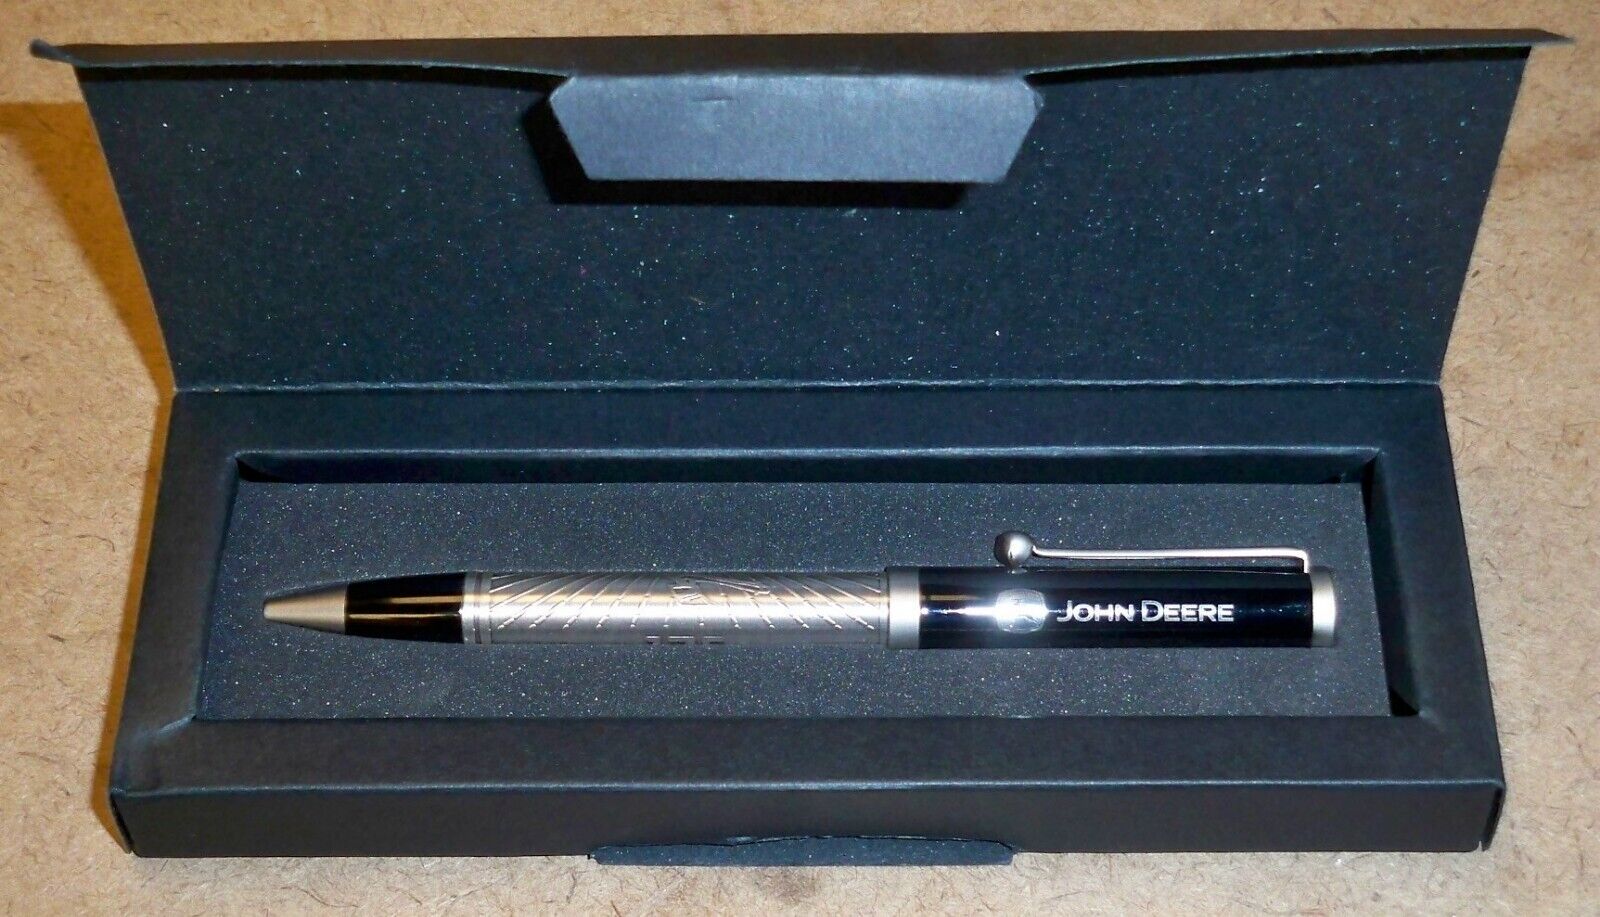 Vintage JOHN DEERE 175 Year Anniversary Pen /WORKS Great & comes w/ Original Box